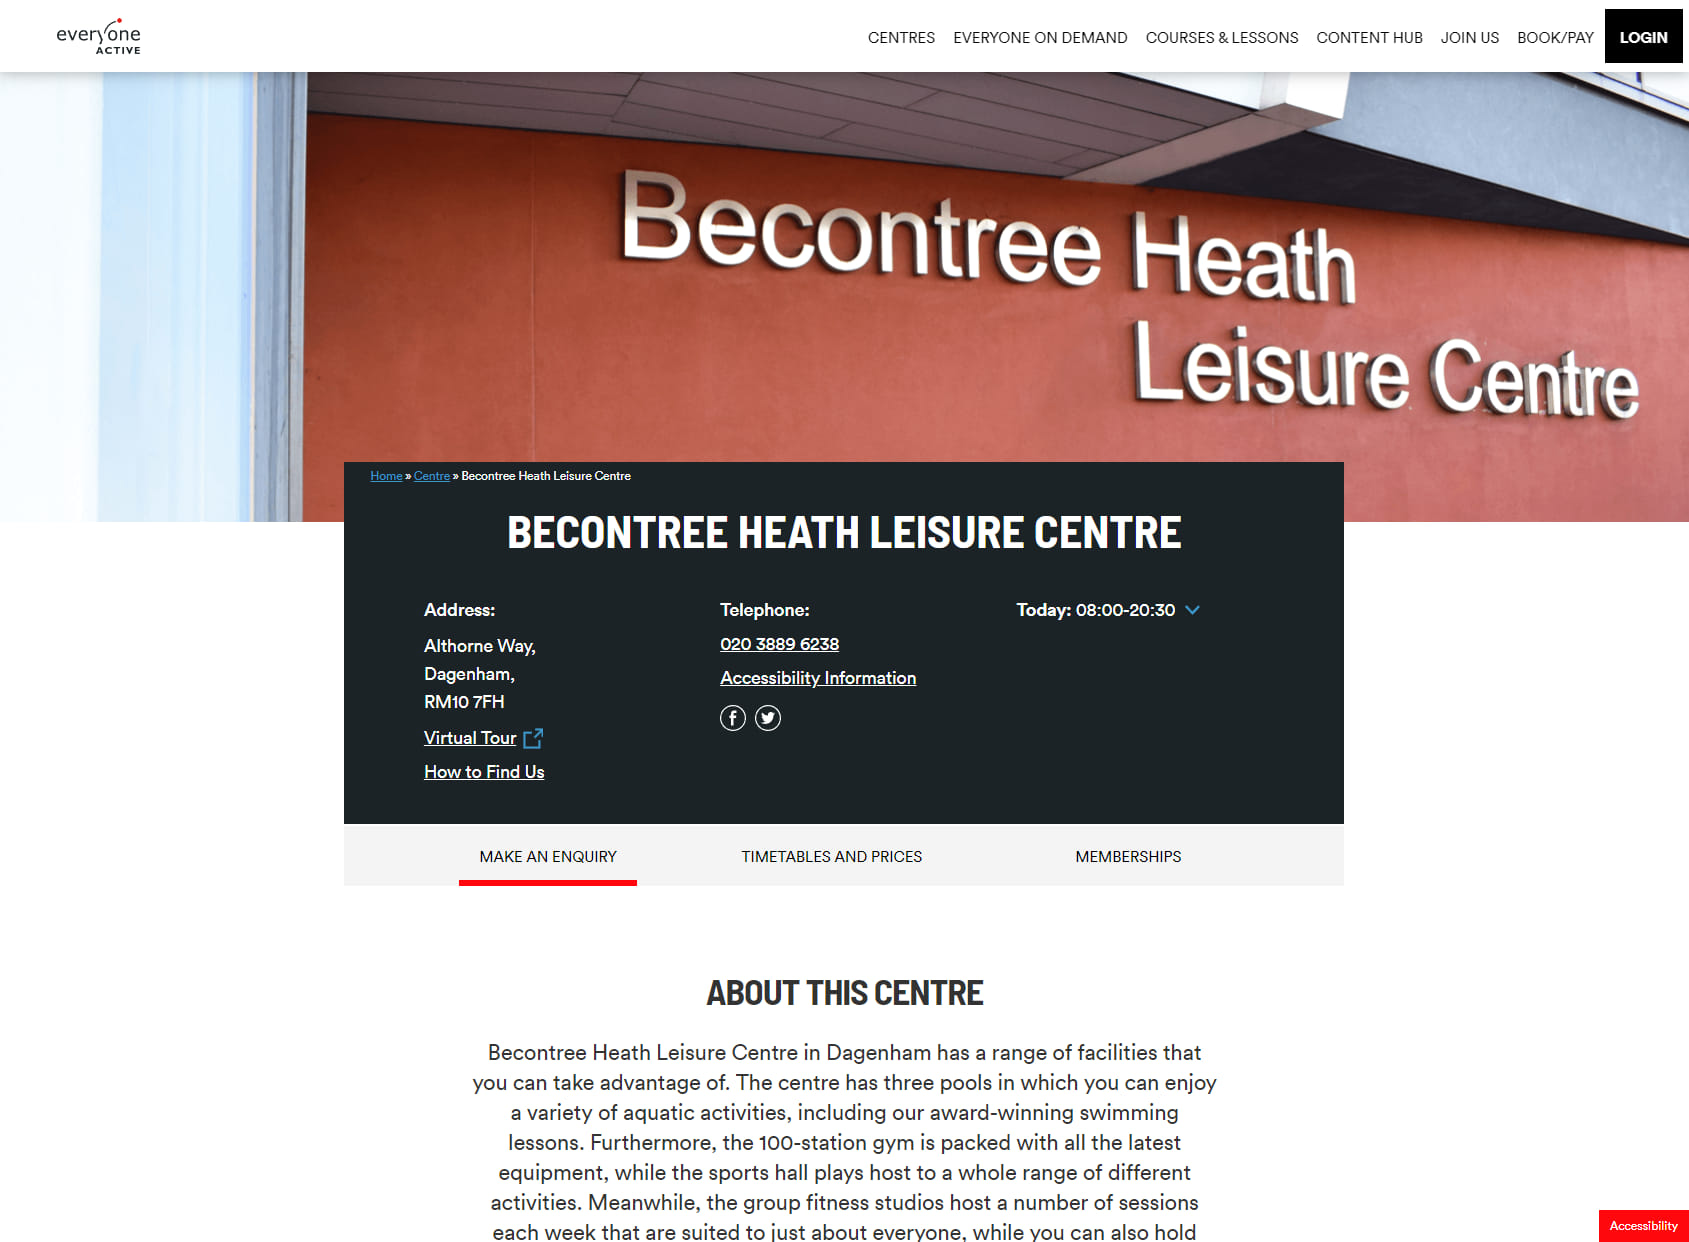 Becontree Heath Leisure Centre